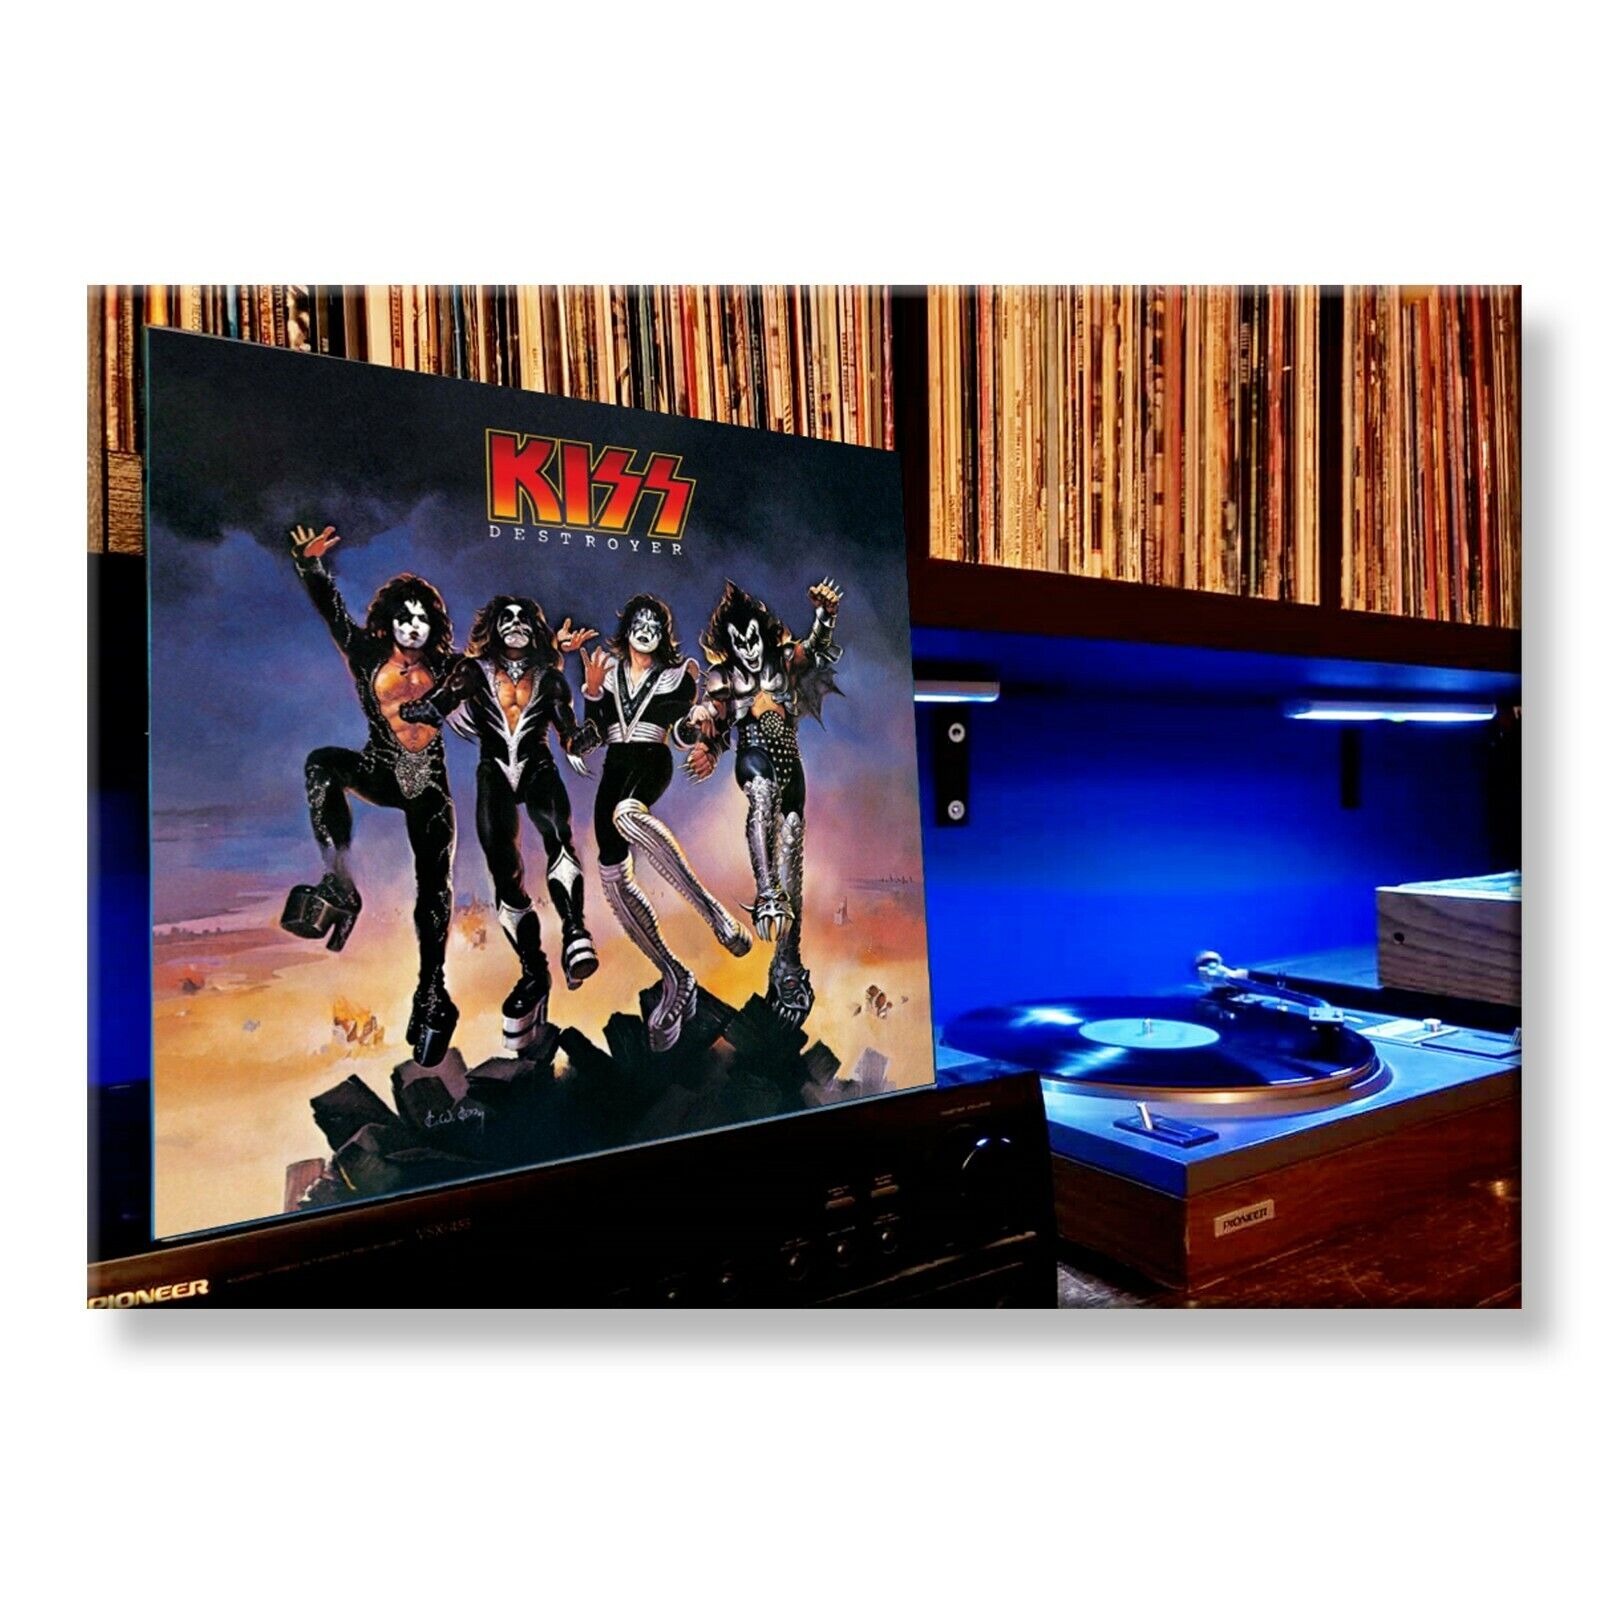 KISS Destroyer Classic Album 3.5 inches x 2.5 inches FRIDGE MAGNET